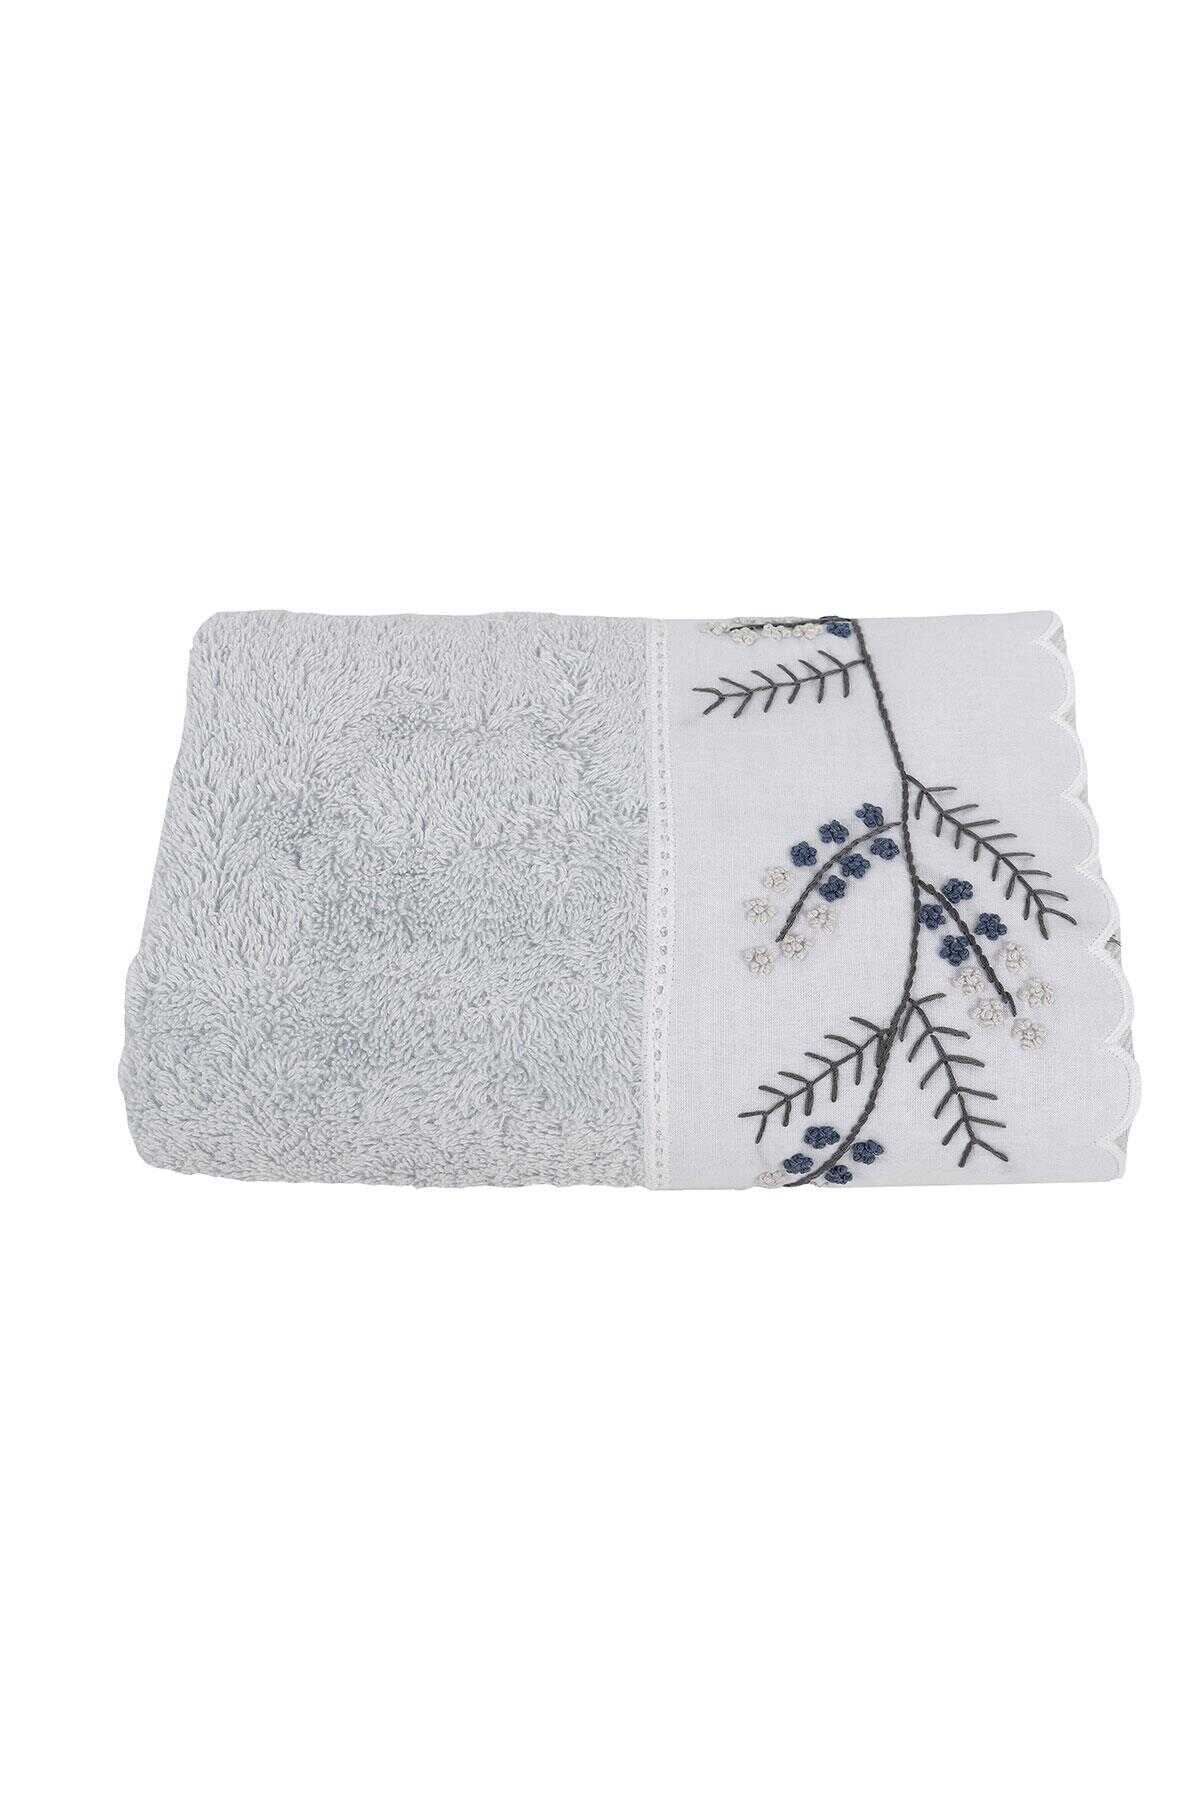 Ecocotton Derin Organic Cotton Woman's Face Towel 50x90 cm